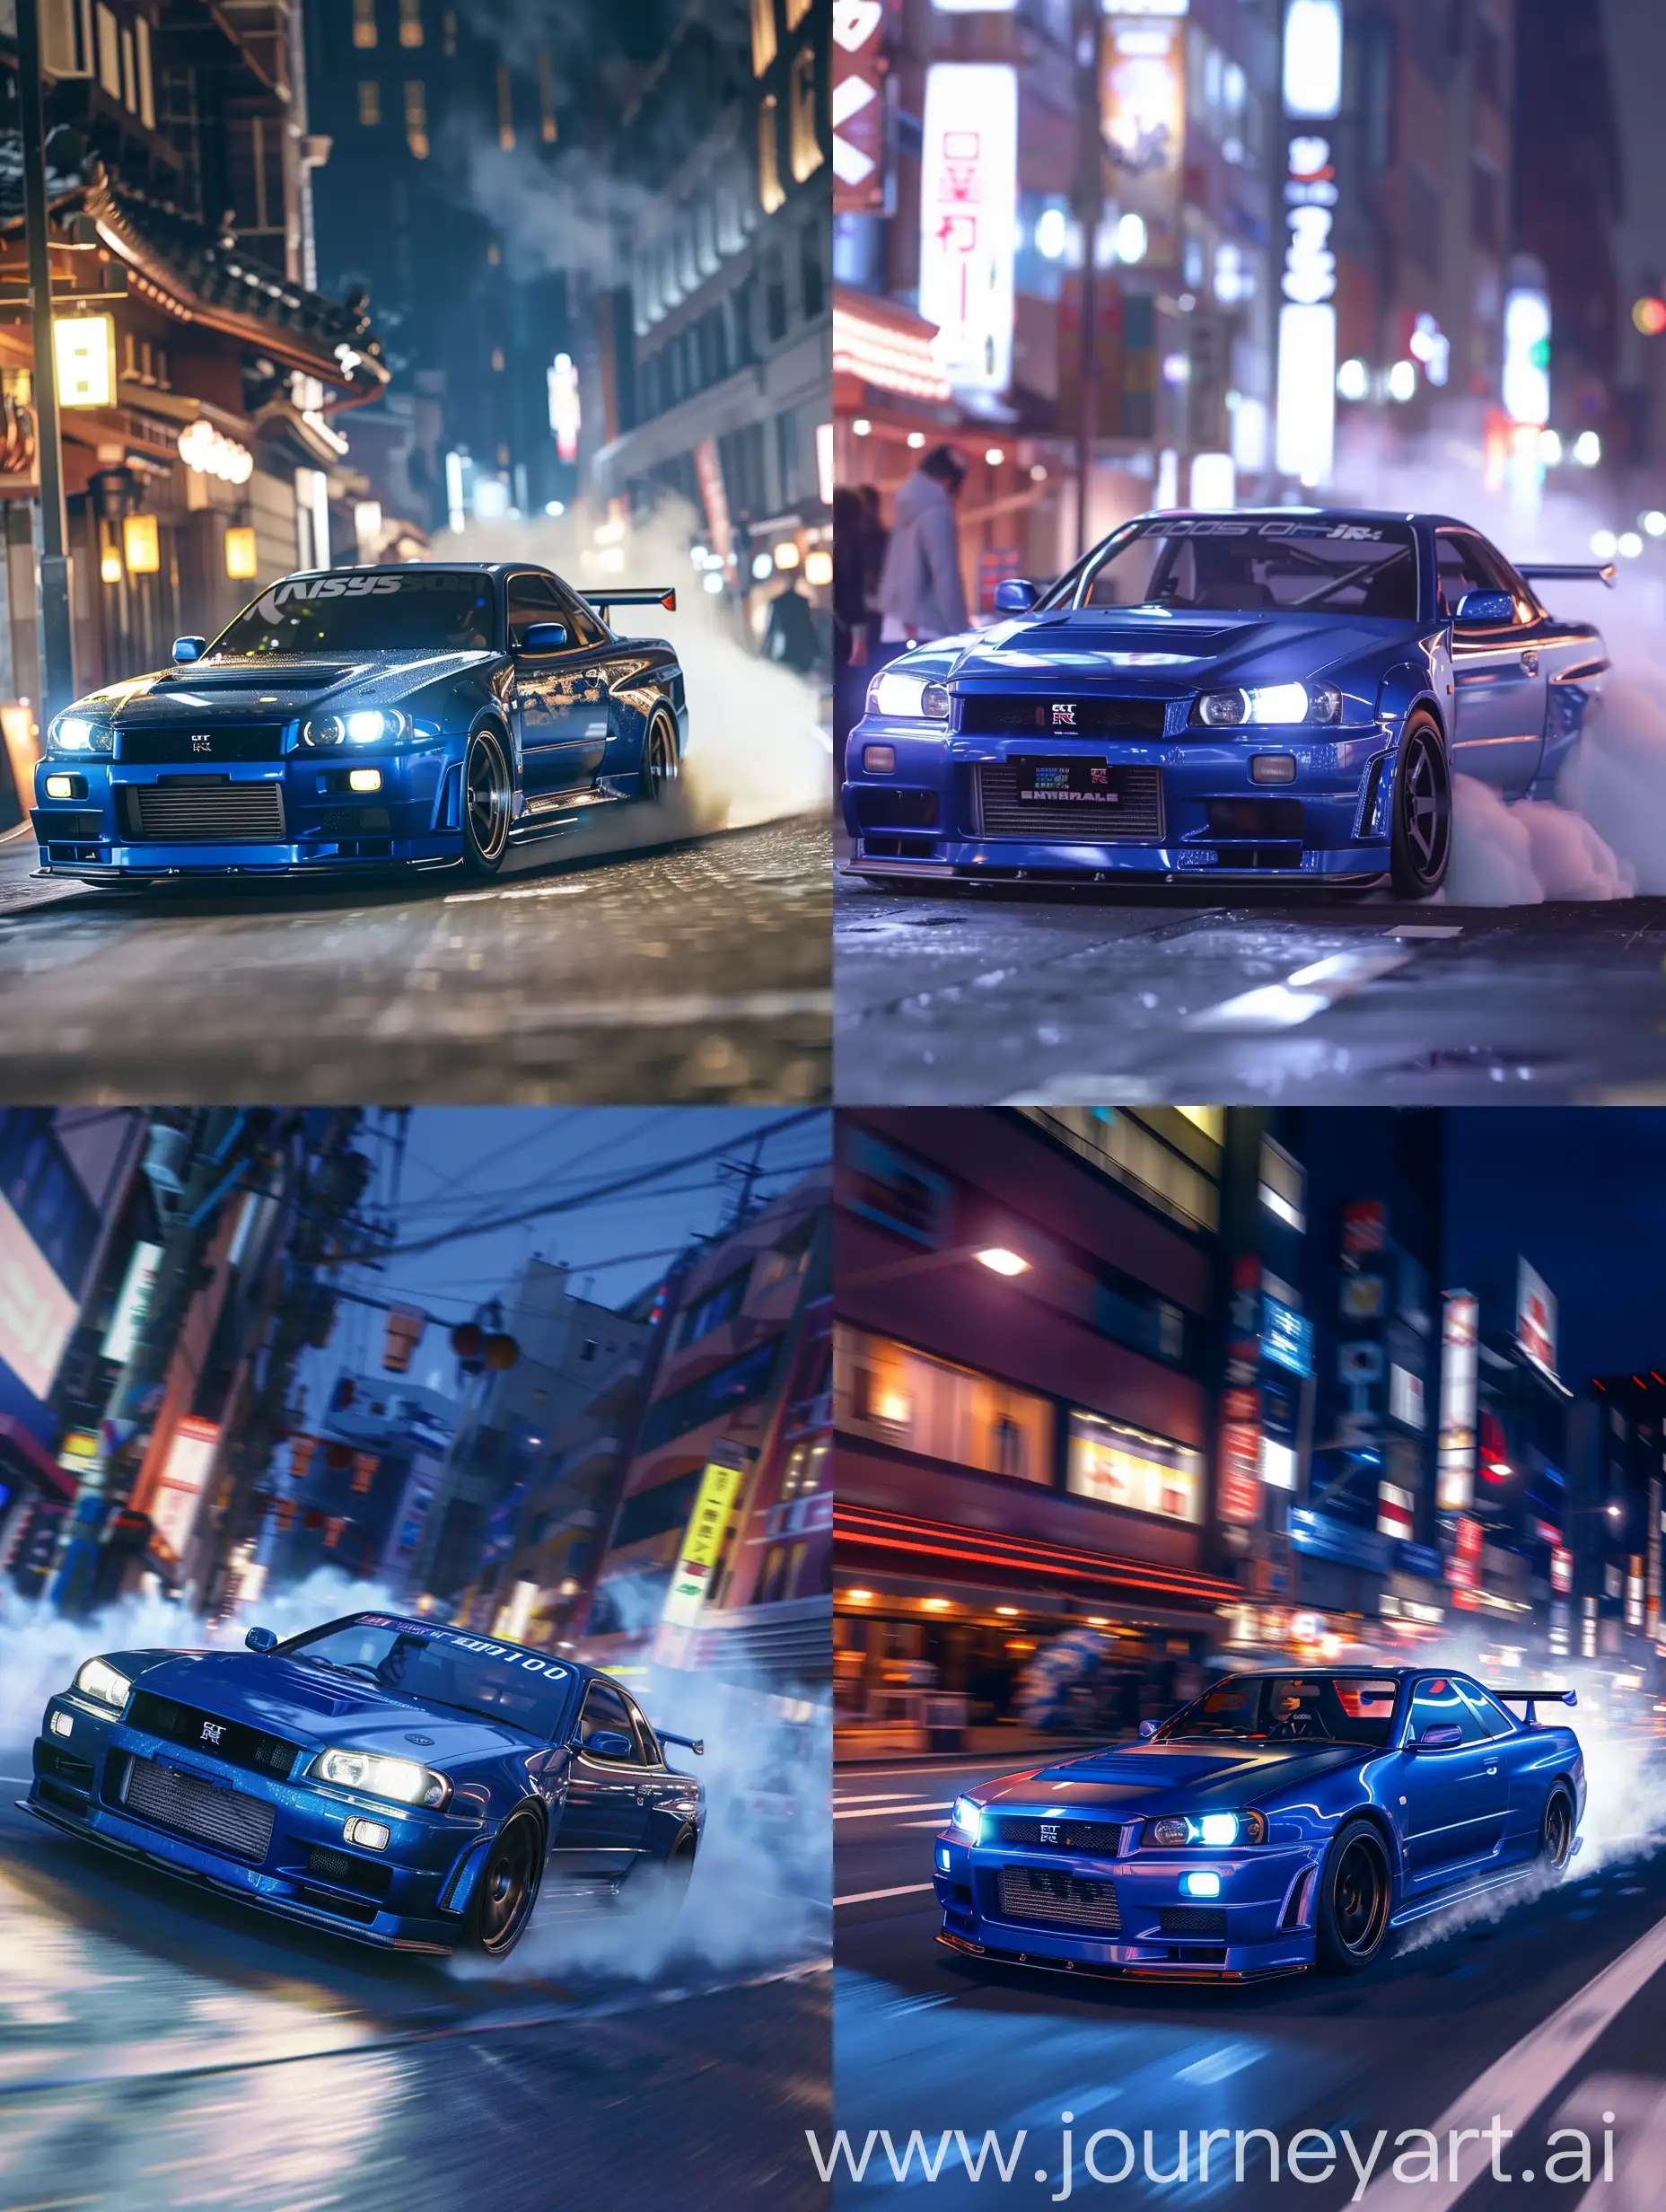 Realistic-Drift-Photoshoot-Blue-Skyline-GTR4-with-Body-Kit-in-Japan